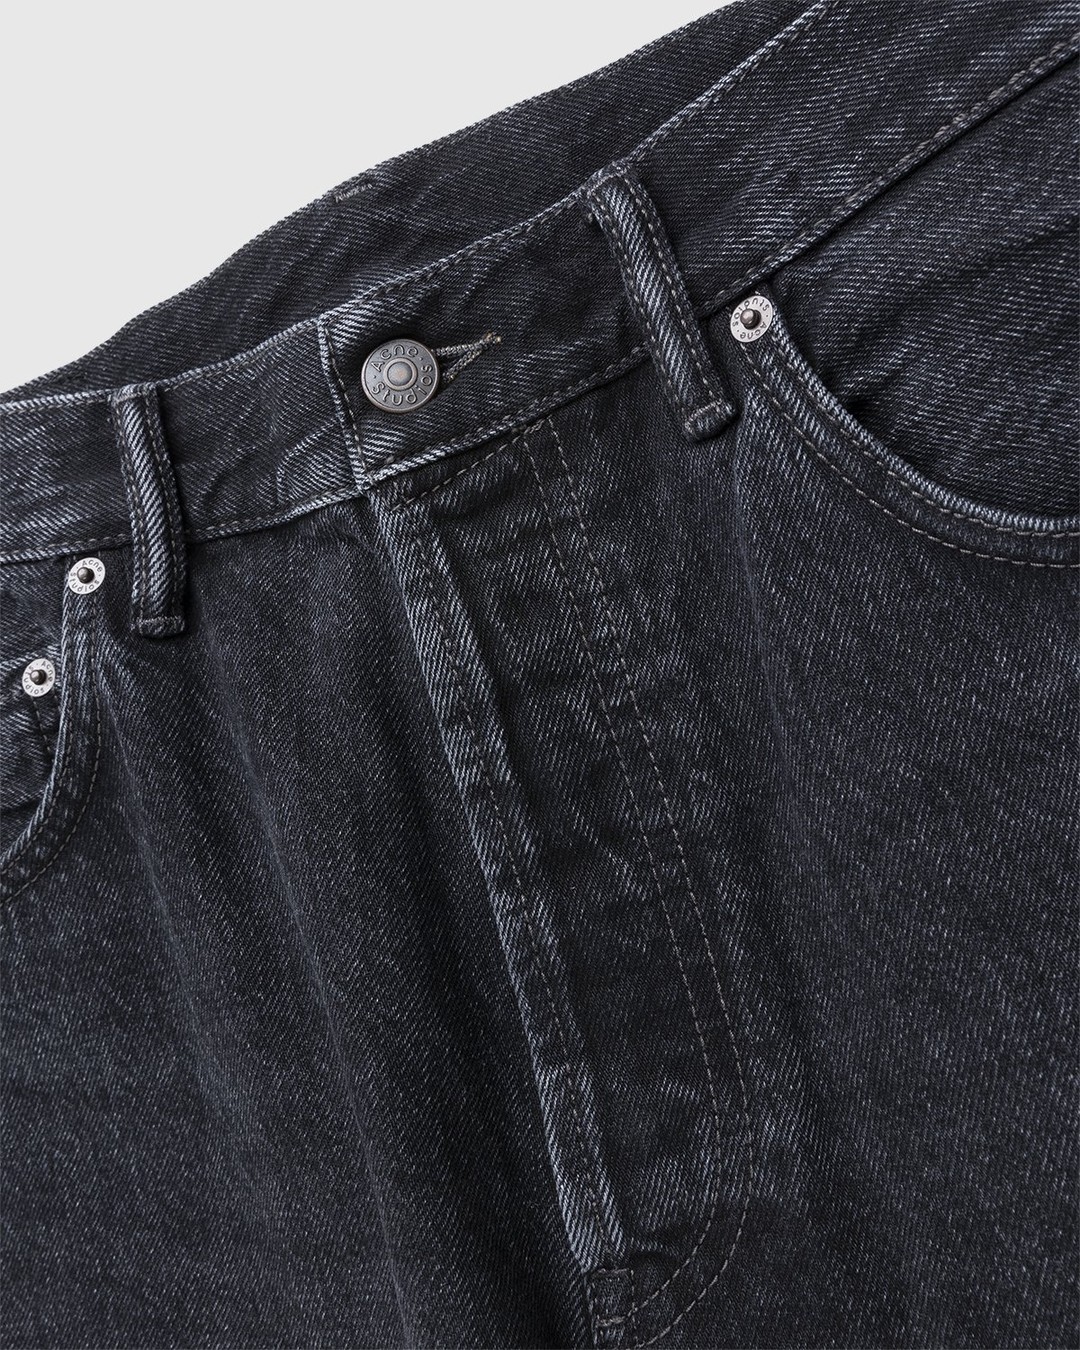 Acne Studios – Brutus 2021M Boot Cut Jeans Black - Denim - Black - Image 4